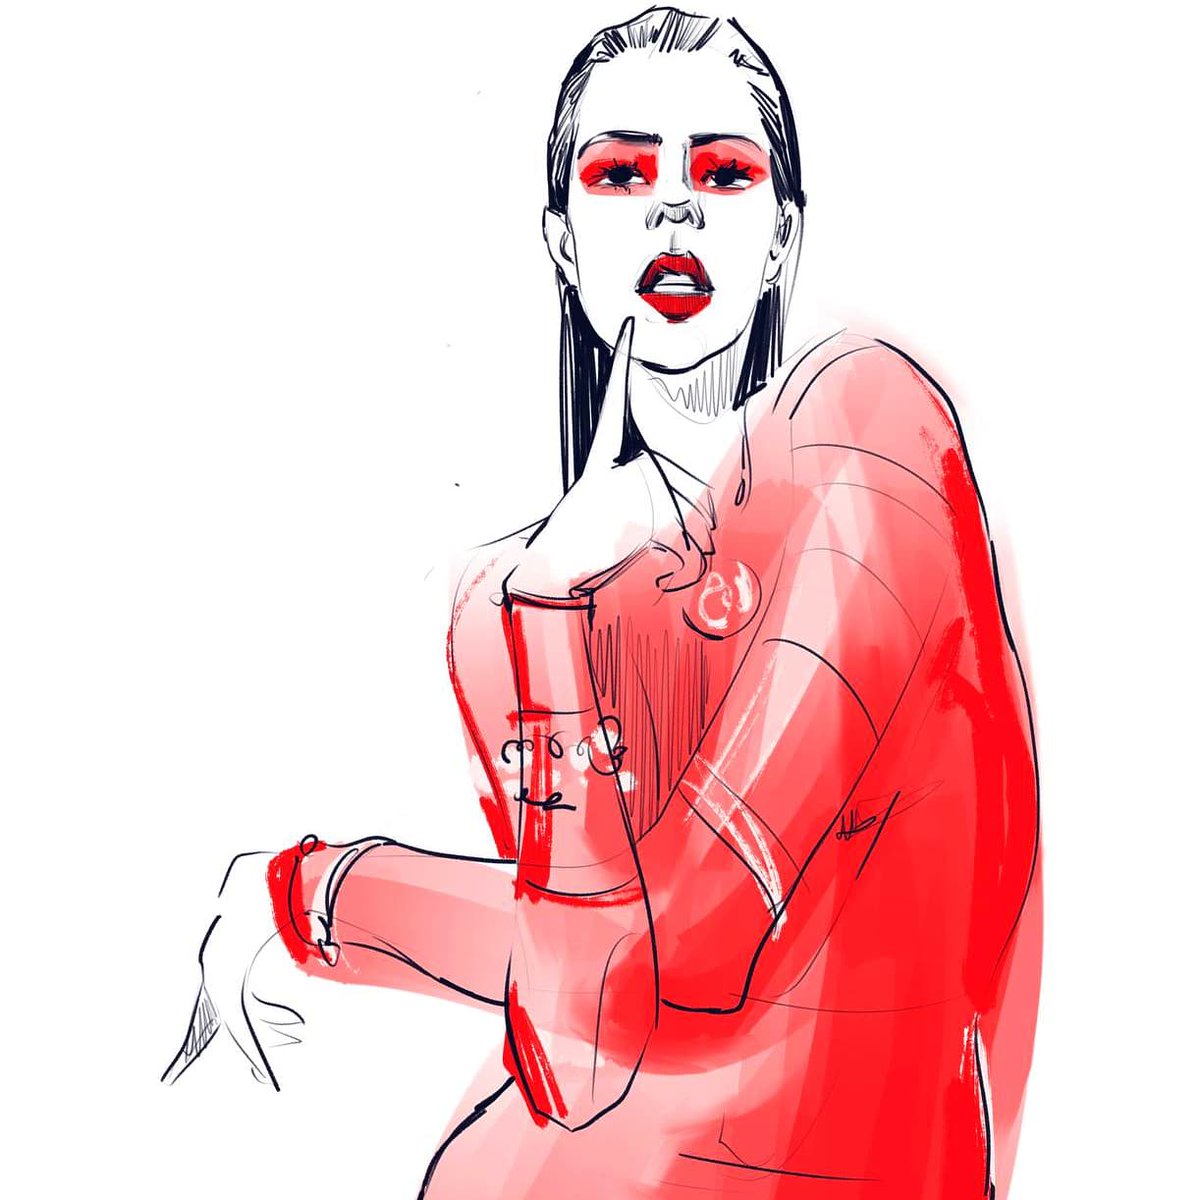 Gm
Fashion...plastic and RED!
🔴
NEW art on @objktcom
☀1/1
☀2 $xtz
Link in the comments 👇

#NFTcommunity #CactusBoom  #FriikkiSkulls #Oolami #s0meone_u_know #blamekato #KATOOG #fashionstyle #fashionillustrator #fashionart